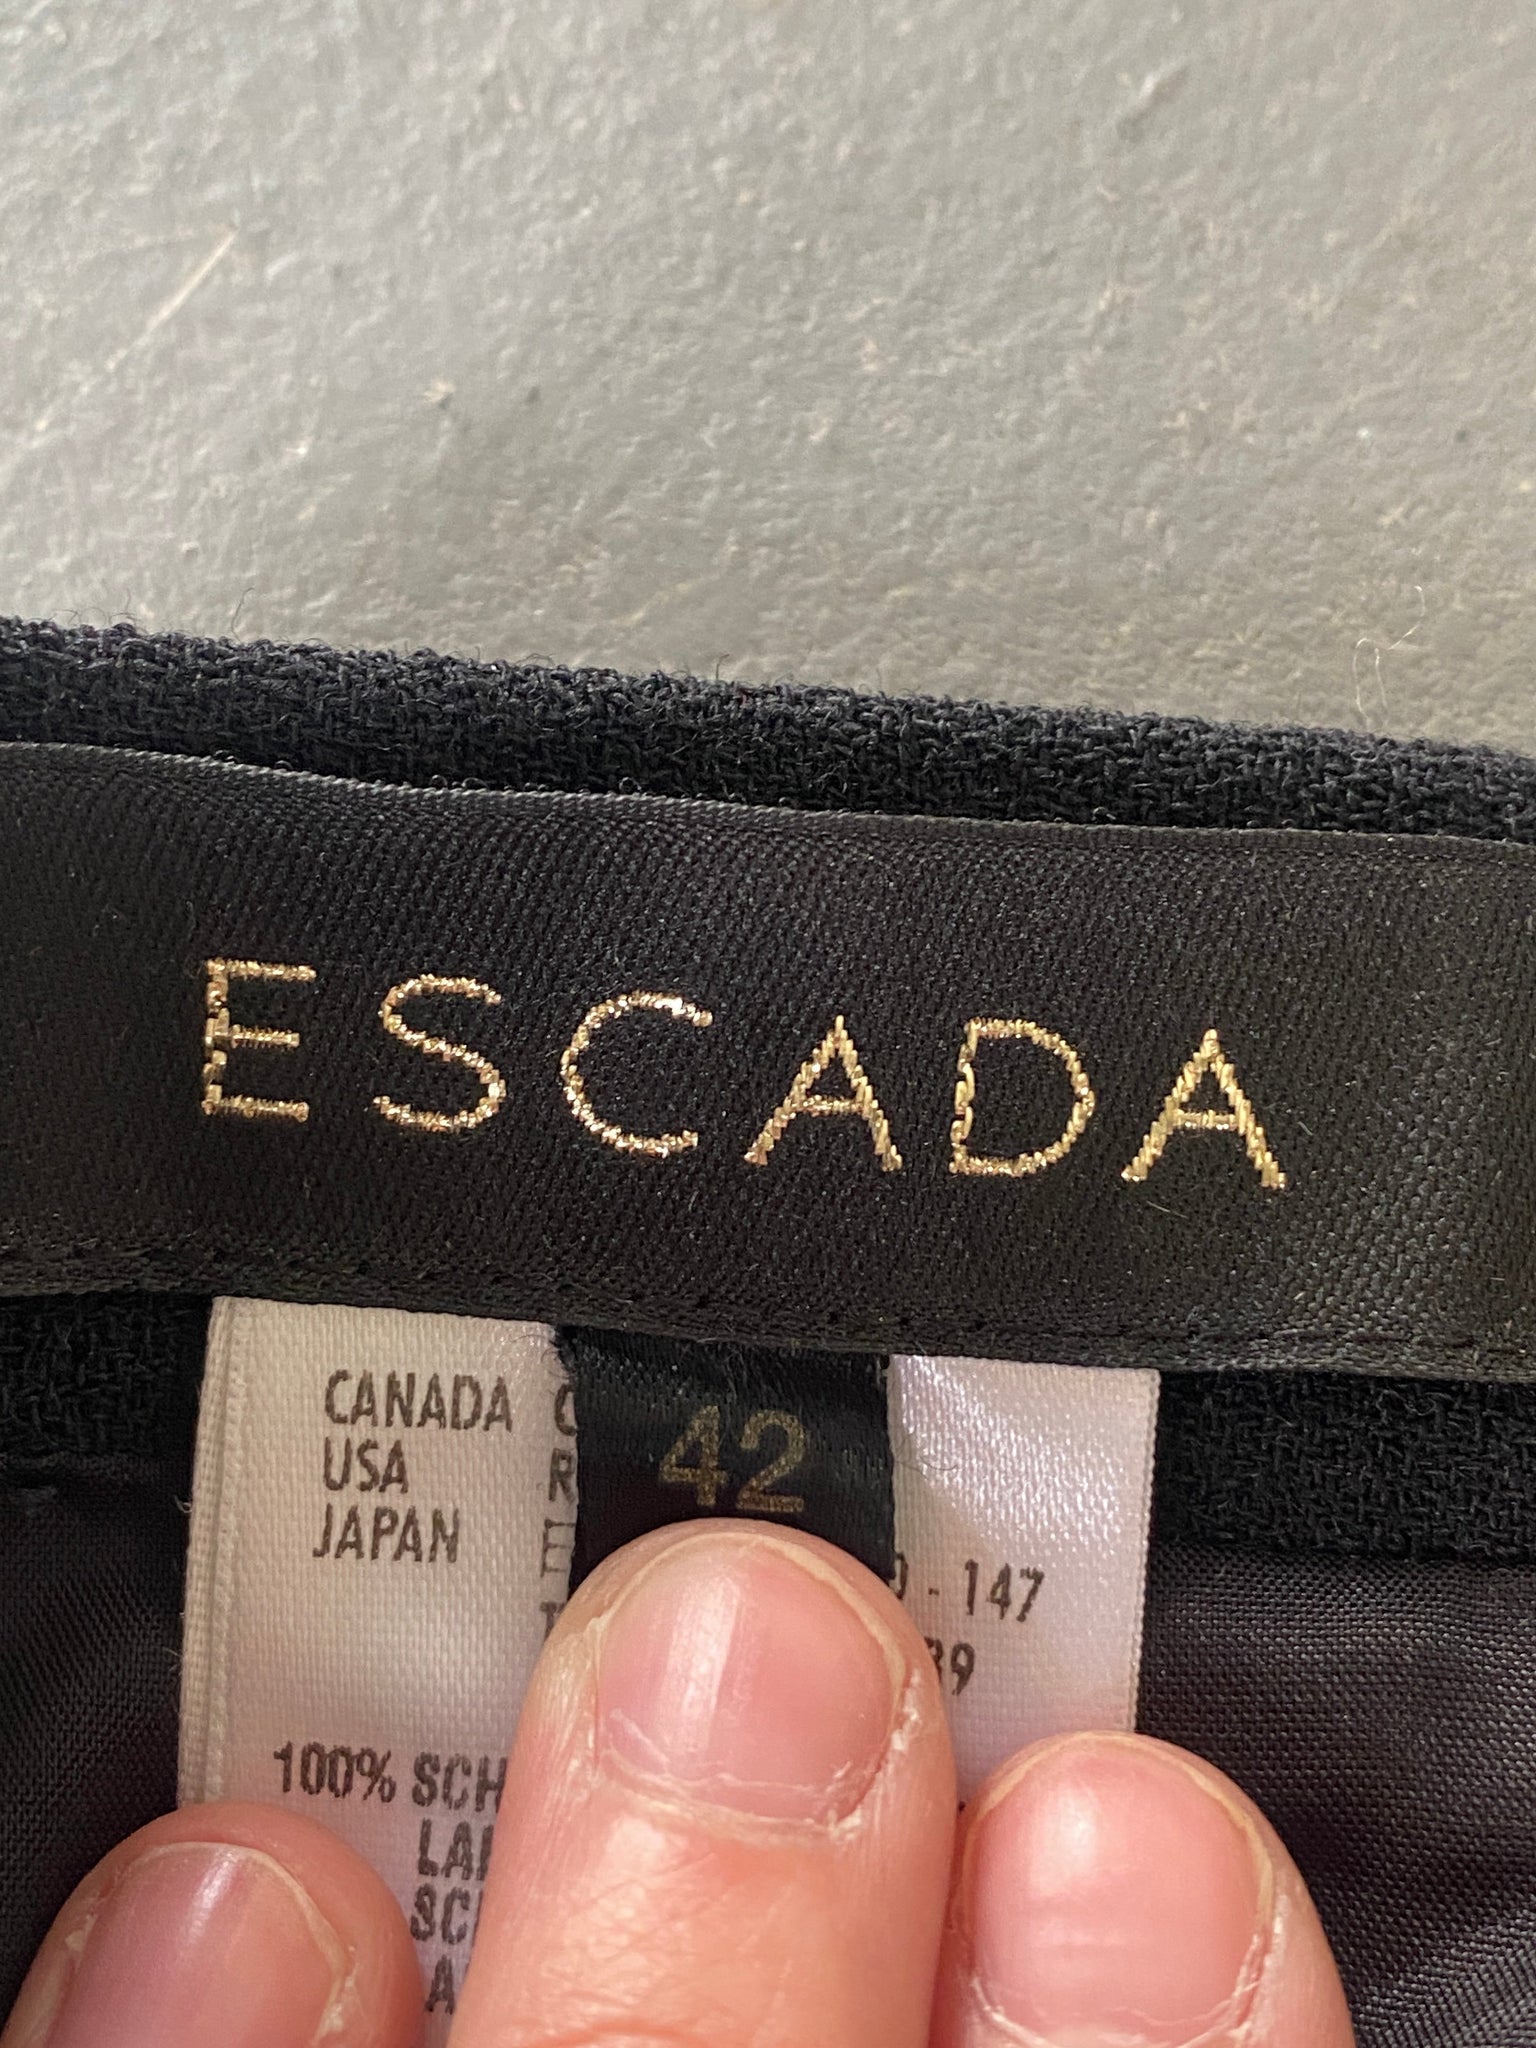 Vintage Escada Wool Skirt (M) – The Nest